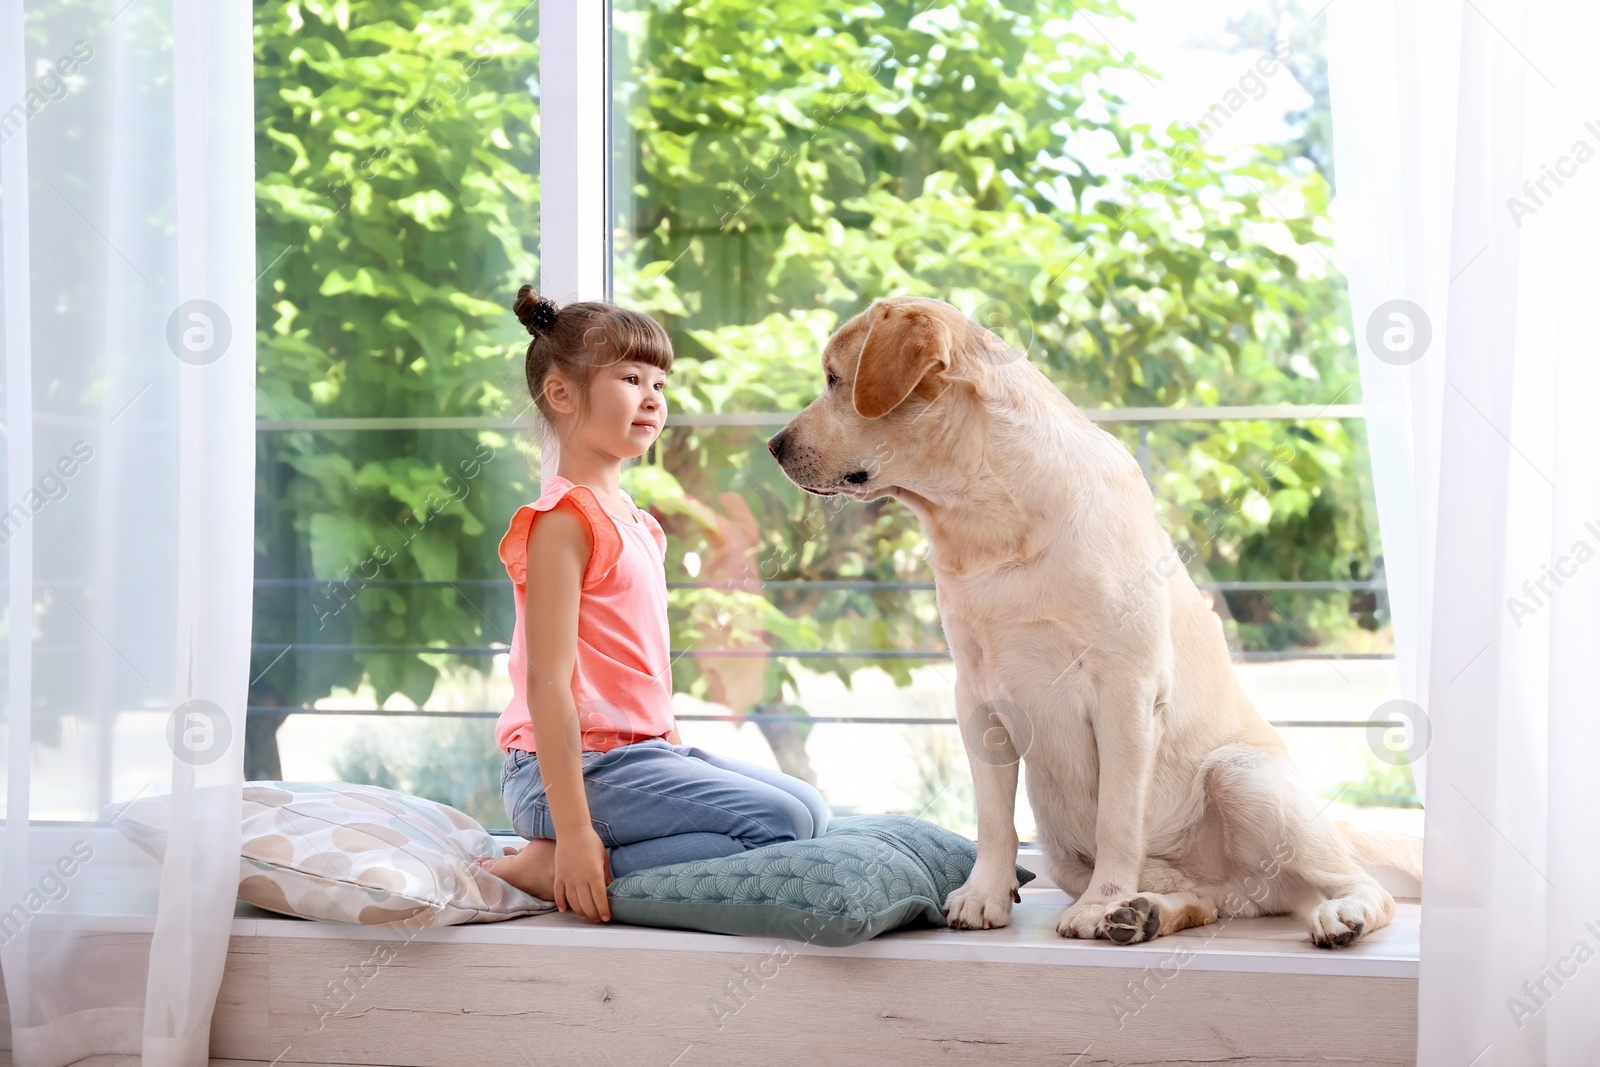 Photo of Adorable yellow labrador retriever and little girl near window at home